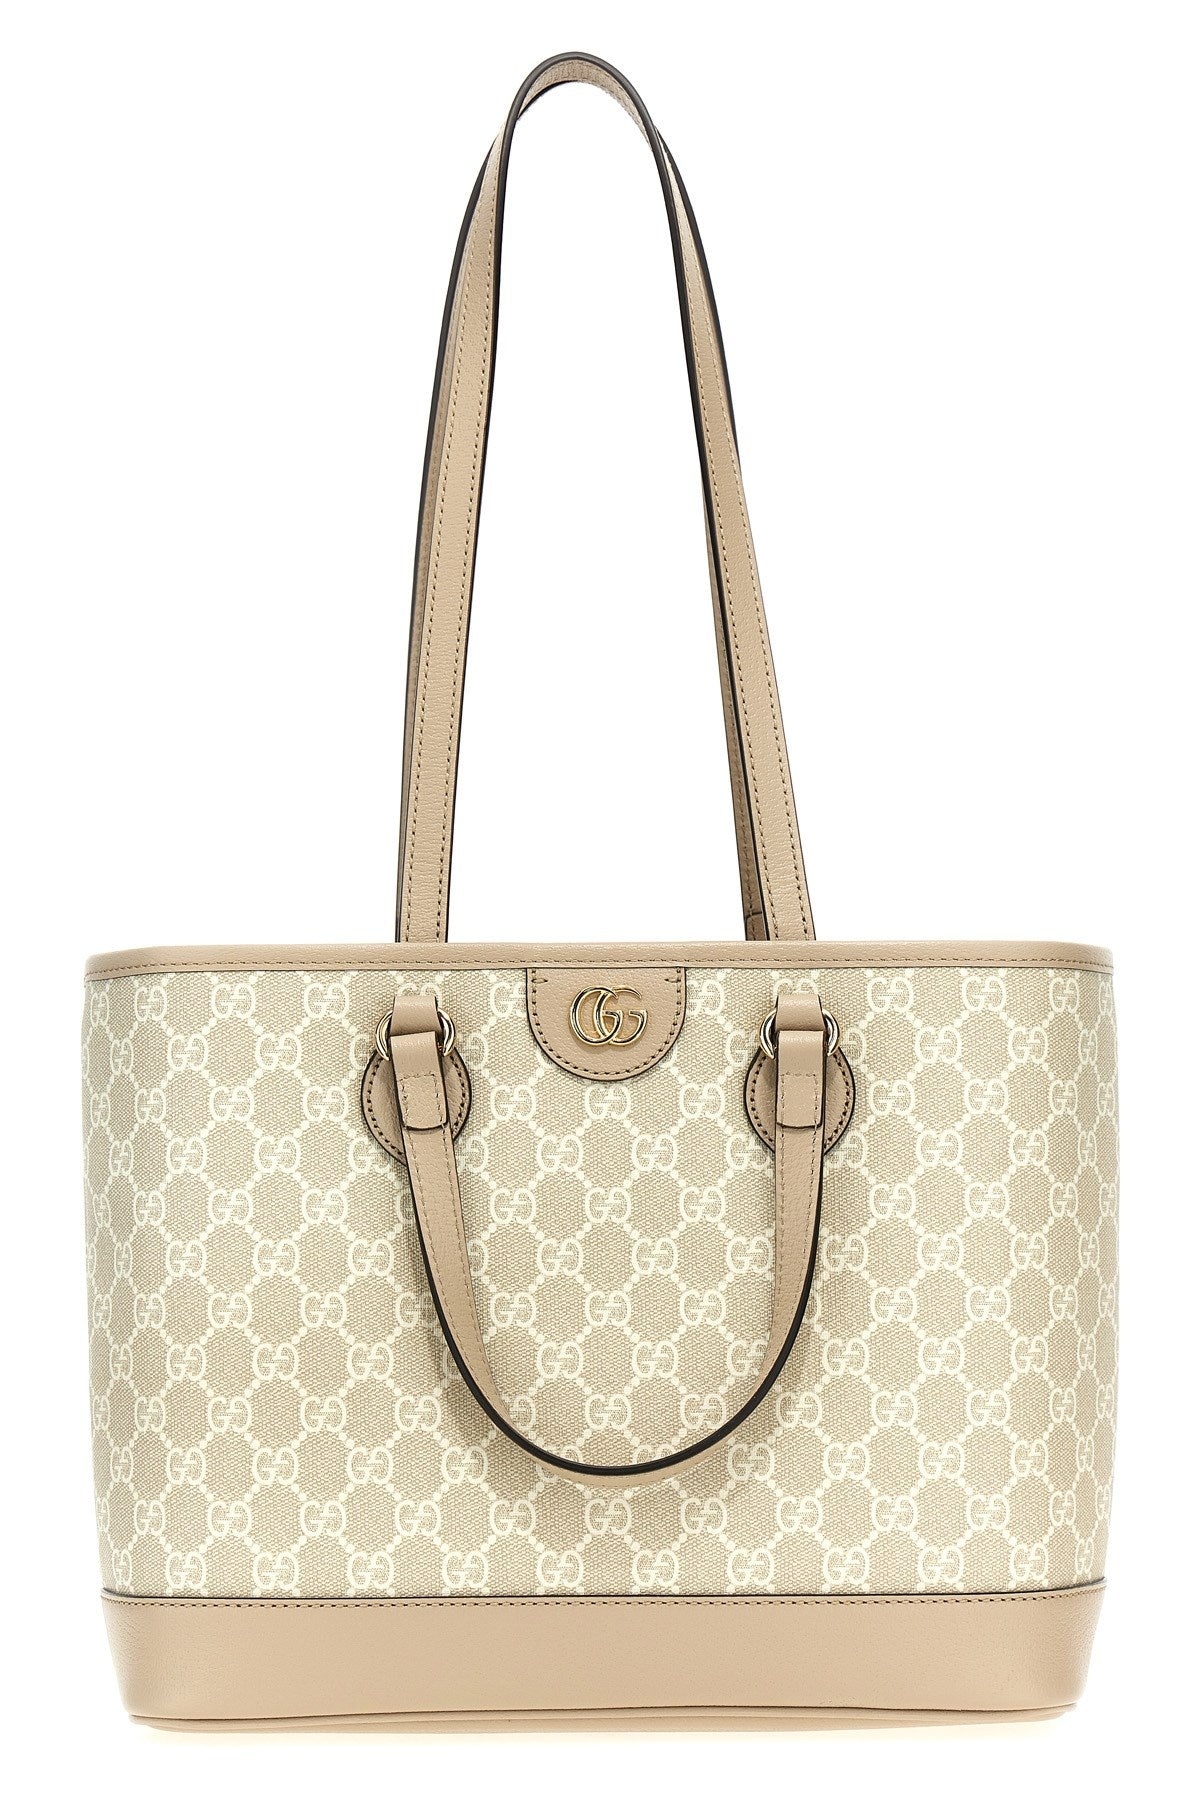 Gucci Women 'Ophidia' Small Shopping Bag - 1